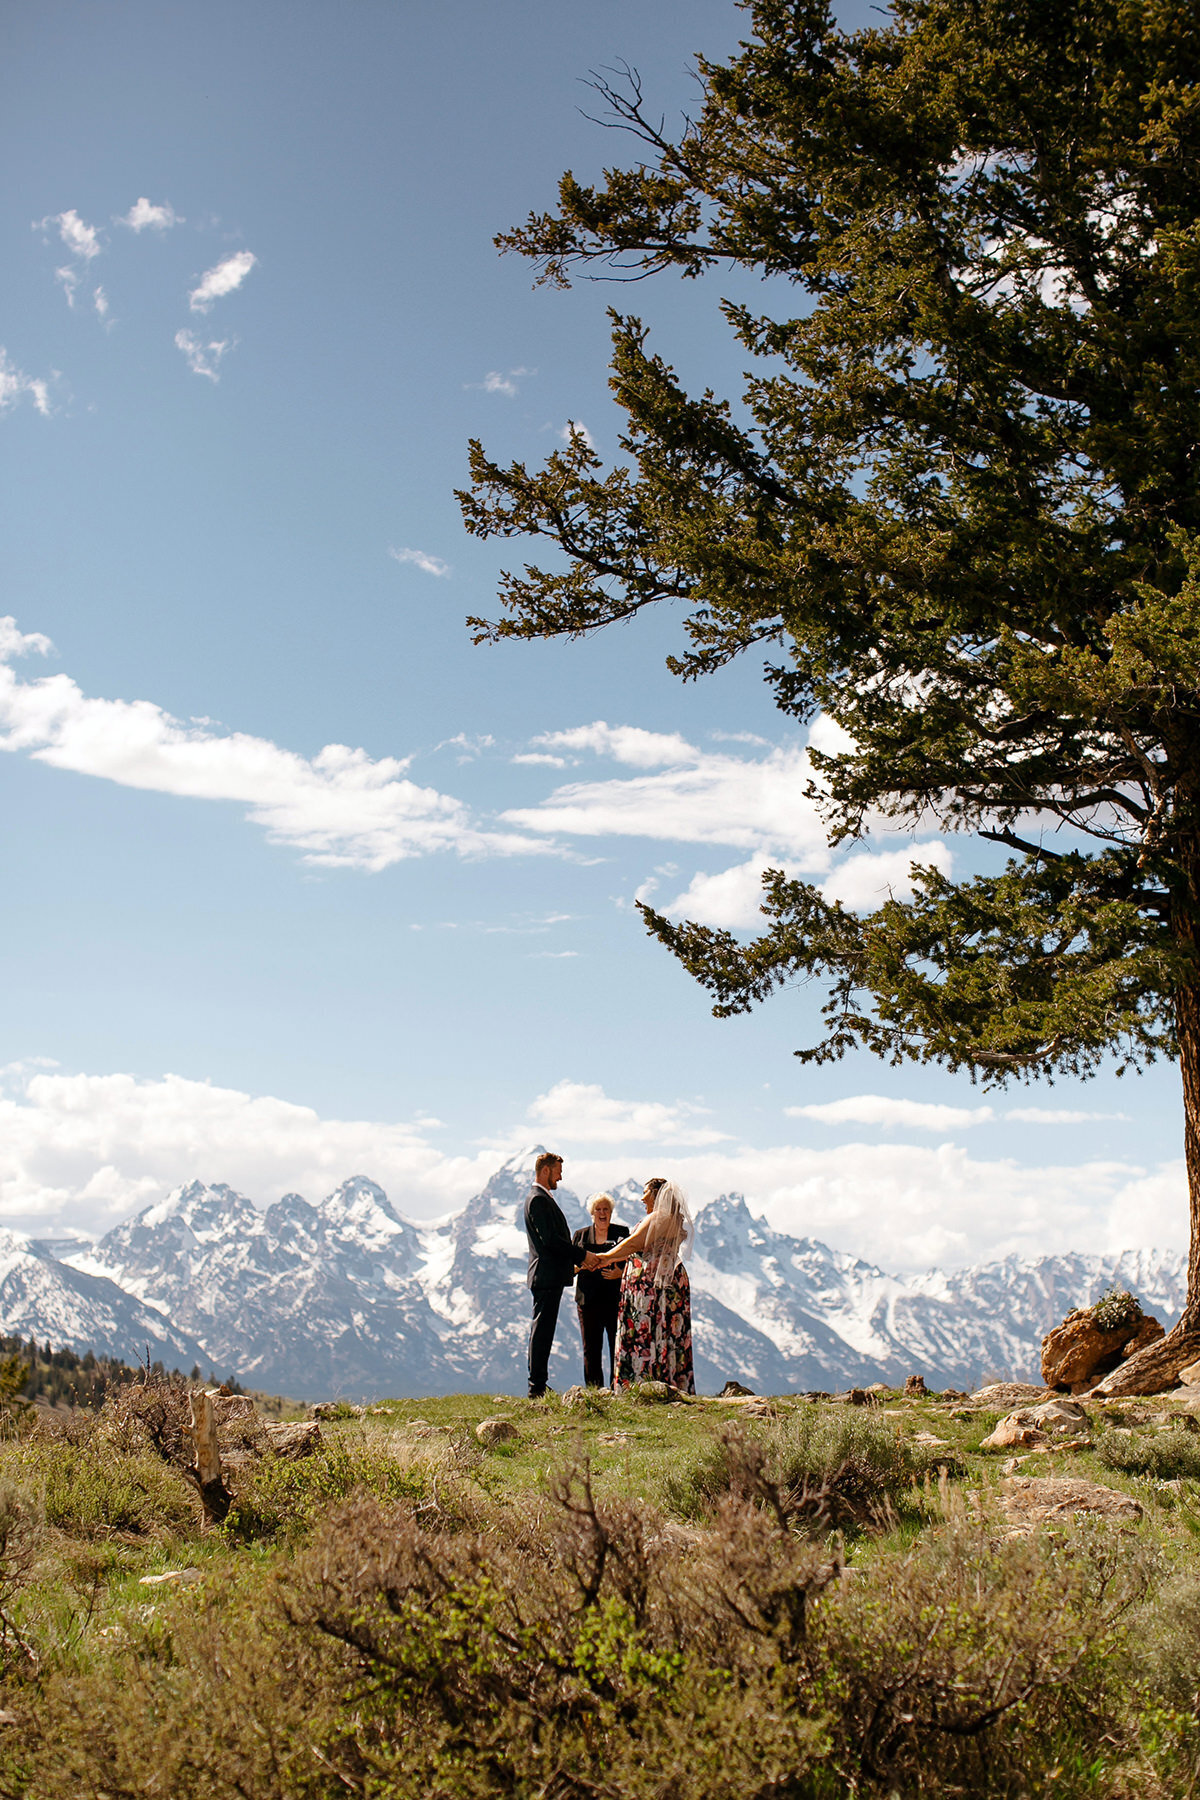 Liz+Osban+Photography+Spring+Grand+Teton+Jackson+Jacksonhole+Yellowstone+Wedding+Destination+Elopement+Adventure+Intimate+Film+Engagement+Cheyenne+Wyoming+Colorado+Rocky+Mountain+National+Park4